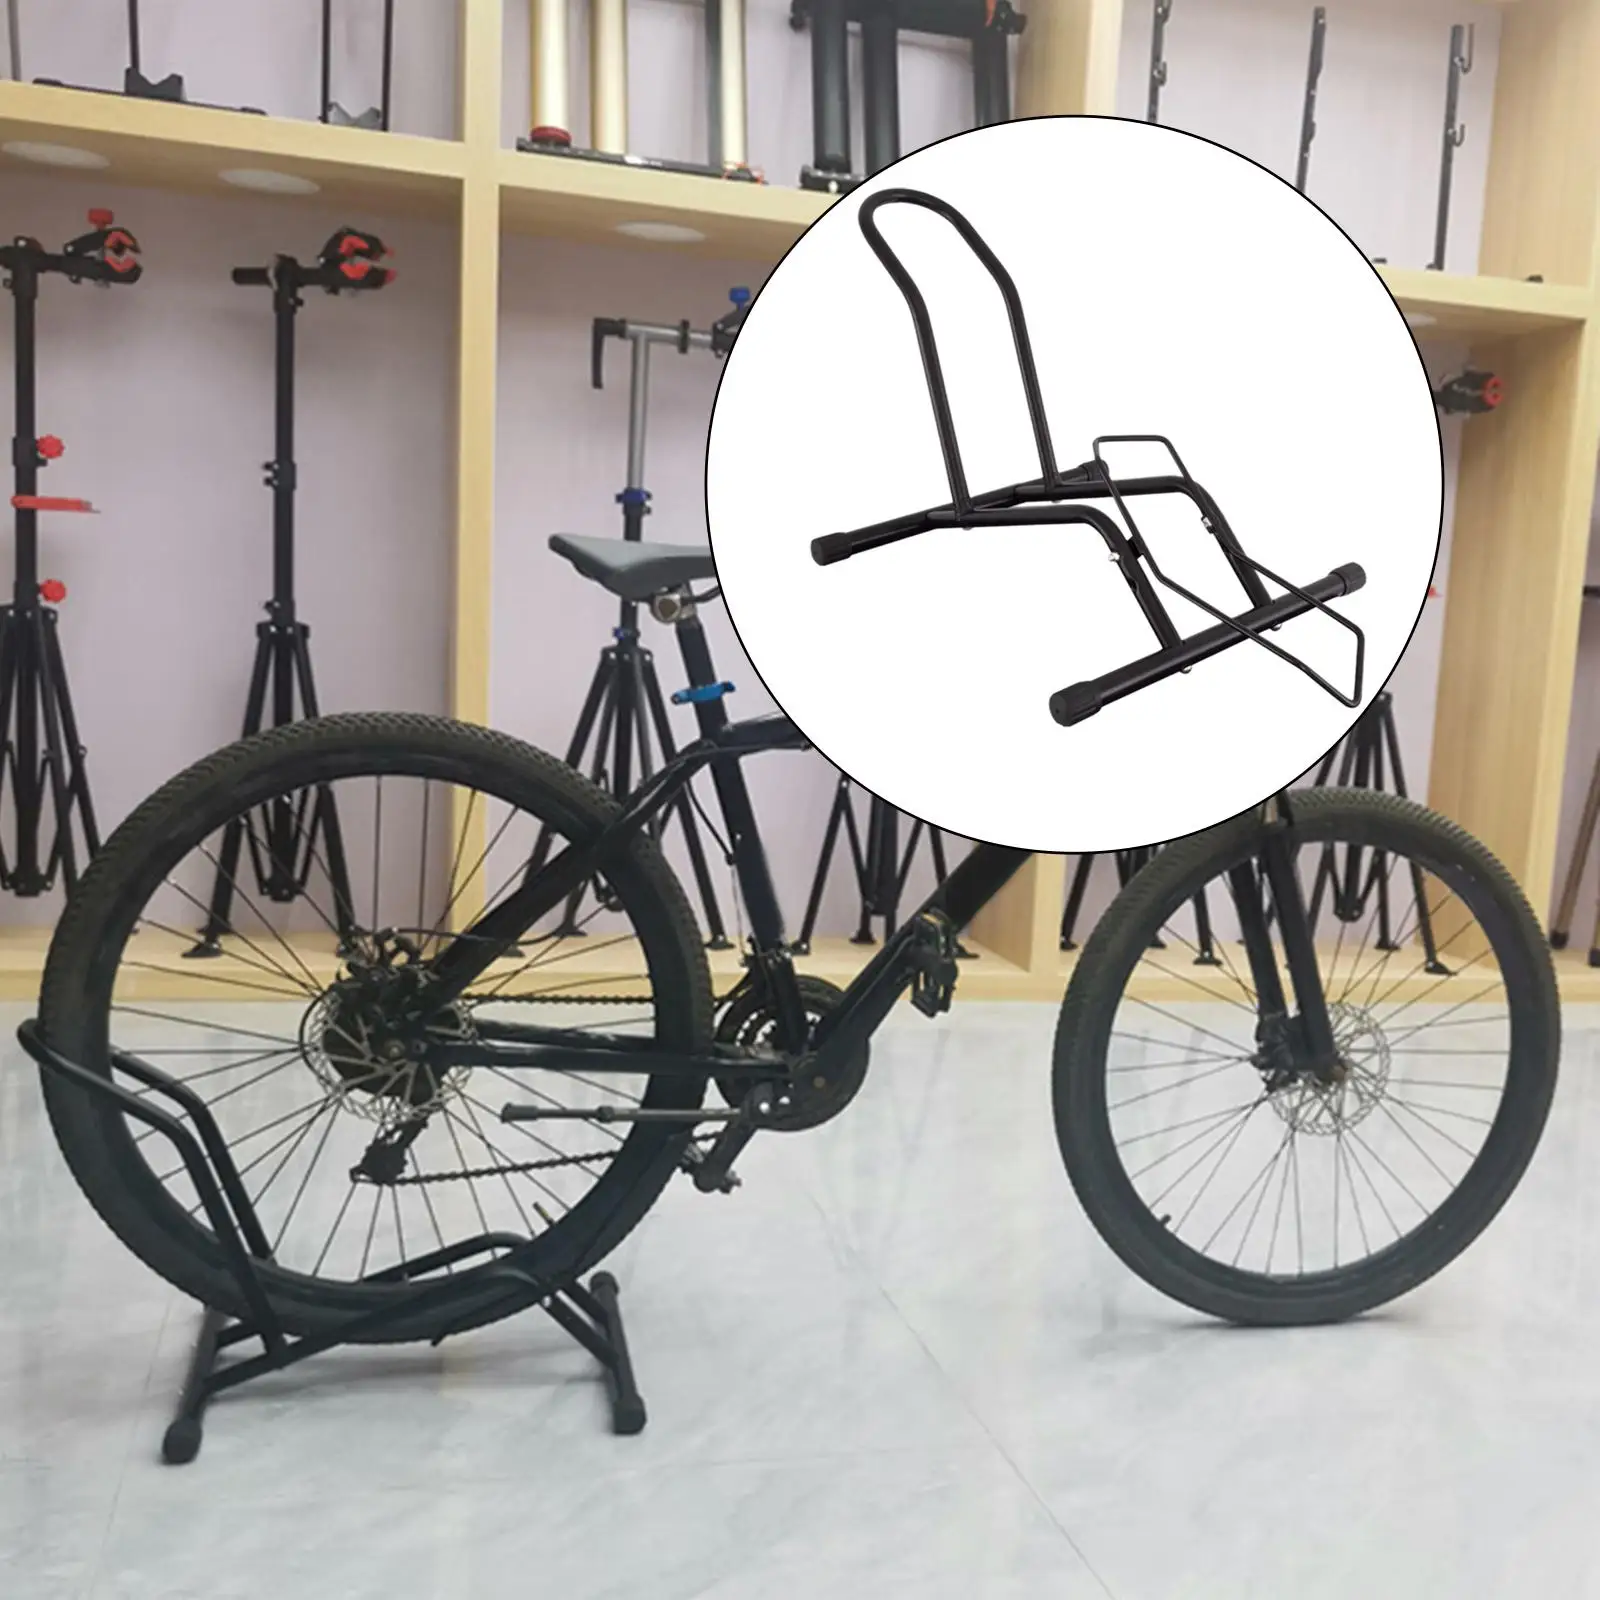 Bicycle Floor Type Parking Rack Display Stand Repair Rack Bike Holder for Indoor Outdoor Mountain Garage Storage Cycling Stand